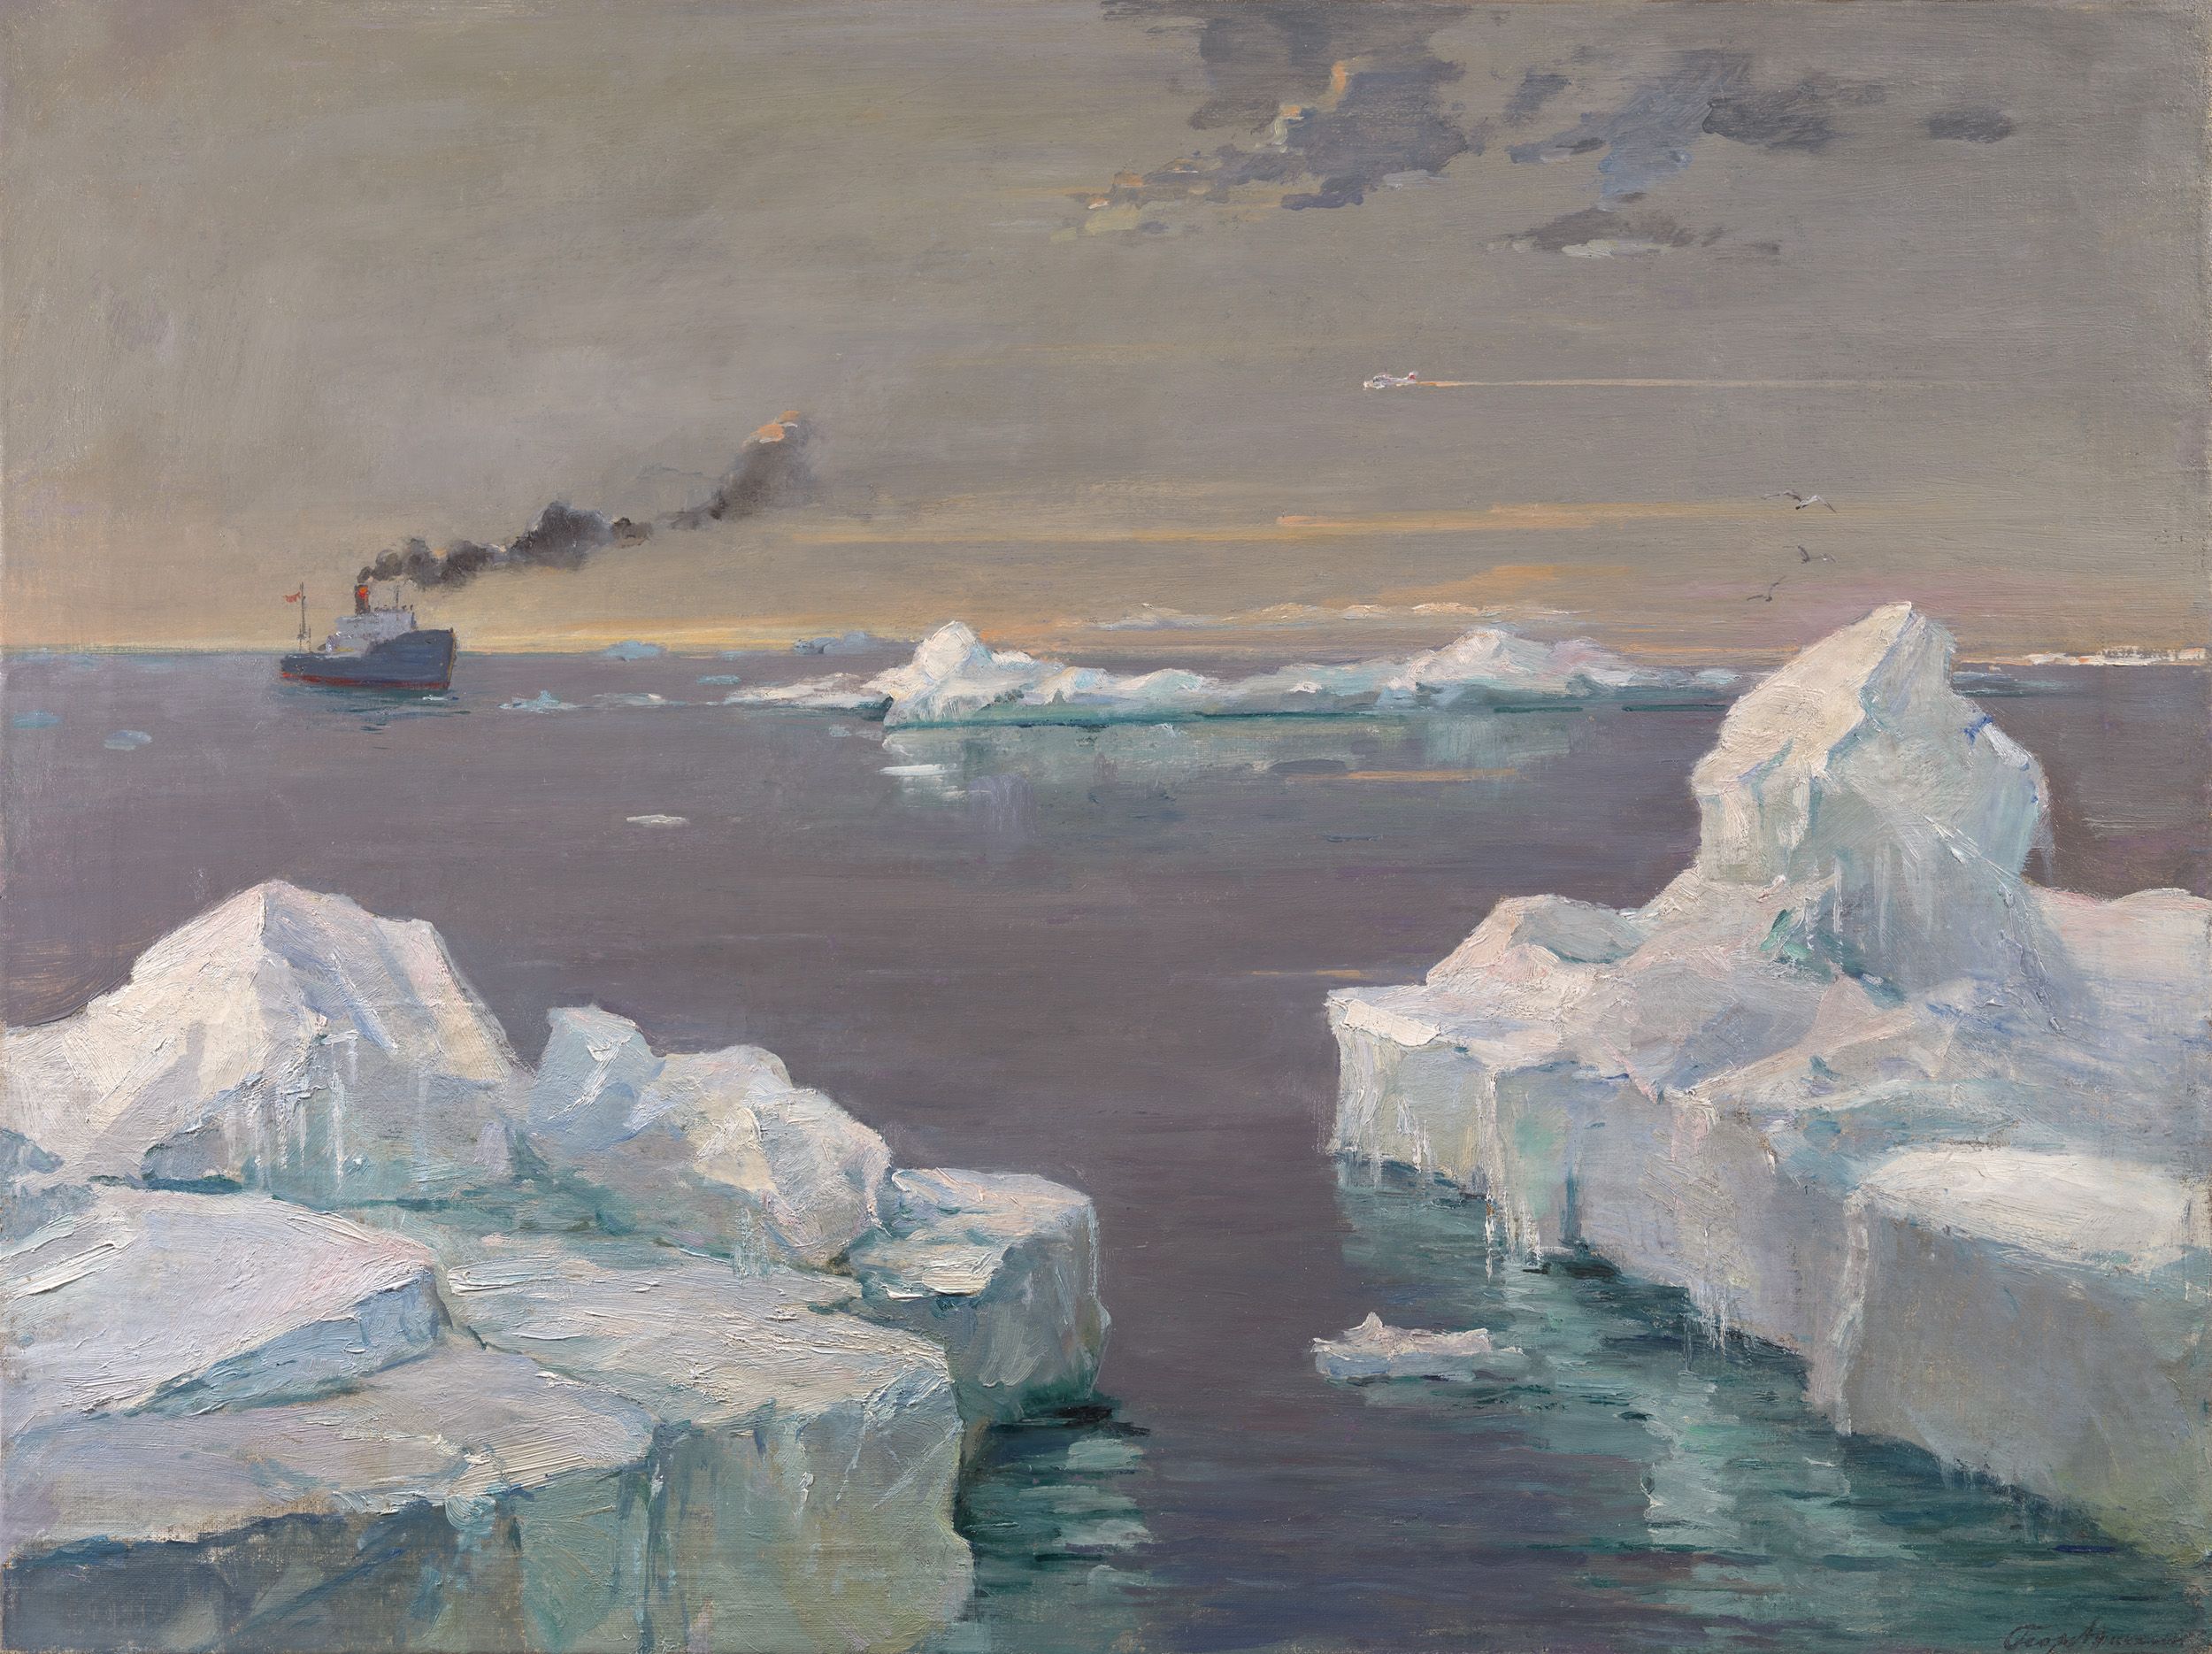 Lot 23, Georgy Nissky, Icebergs